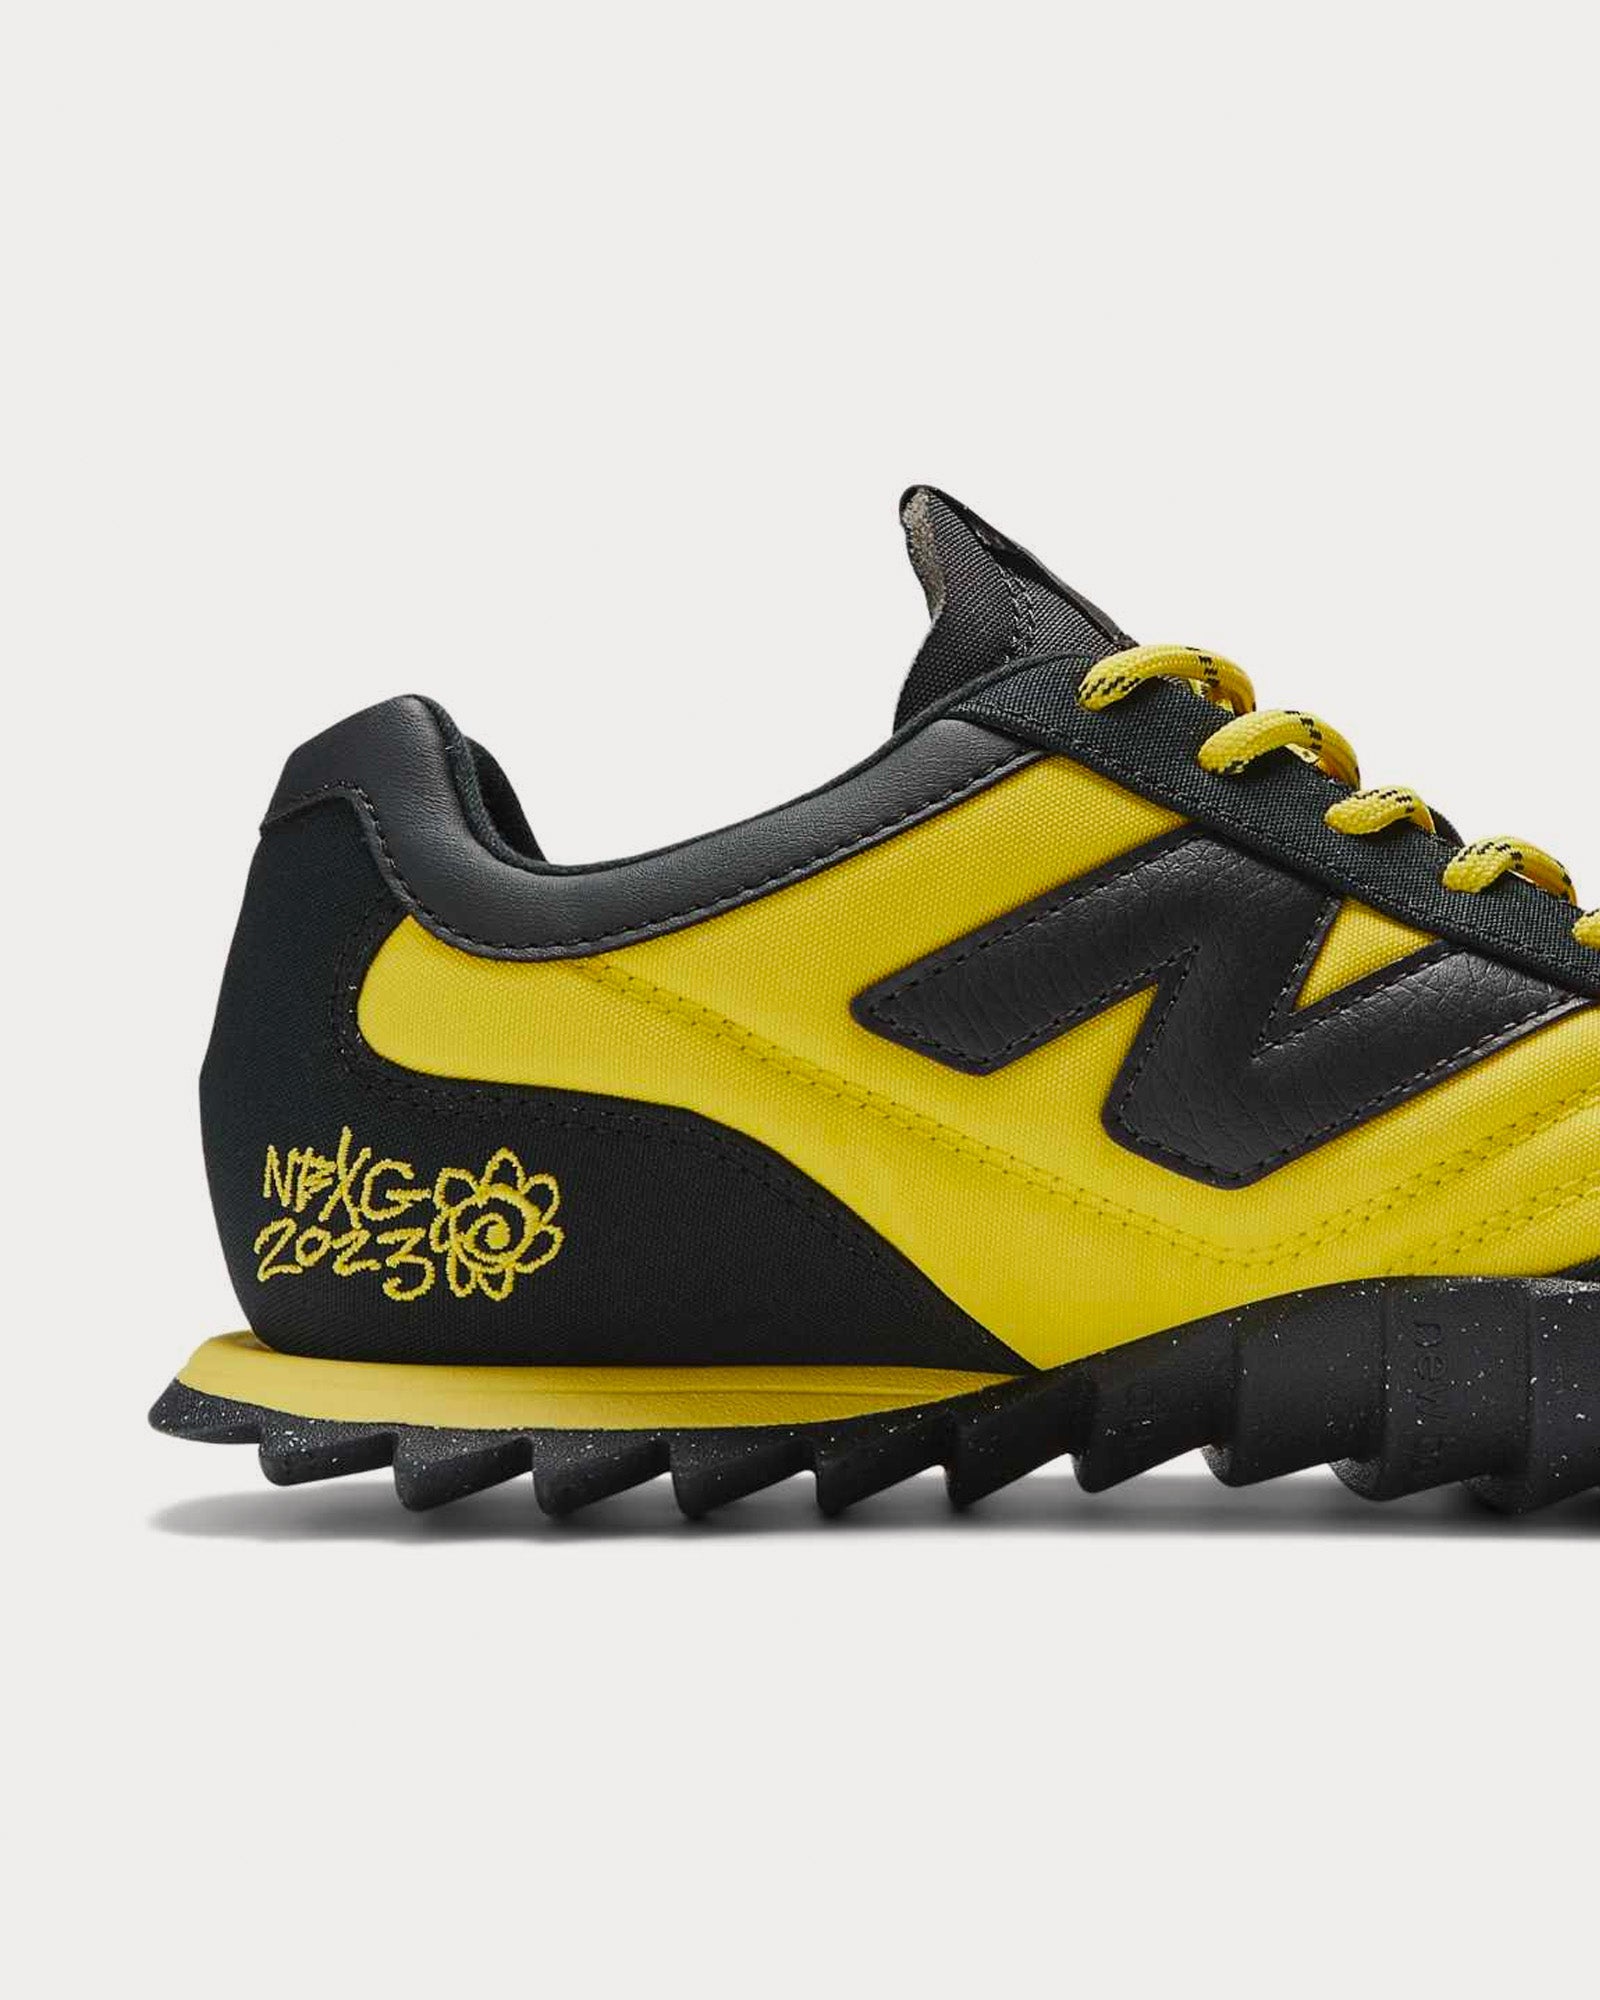 New Balance x Ganni - RC30 Black / Blazing Yellow Low Top Sneakers